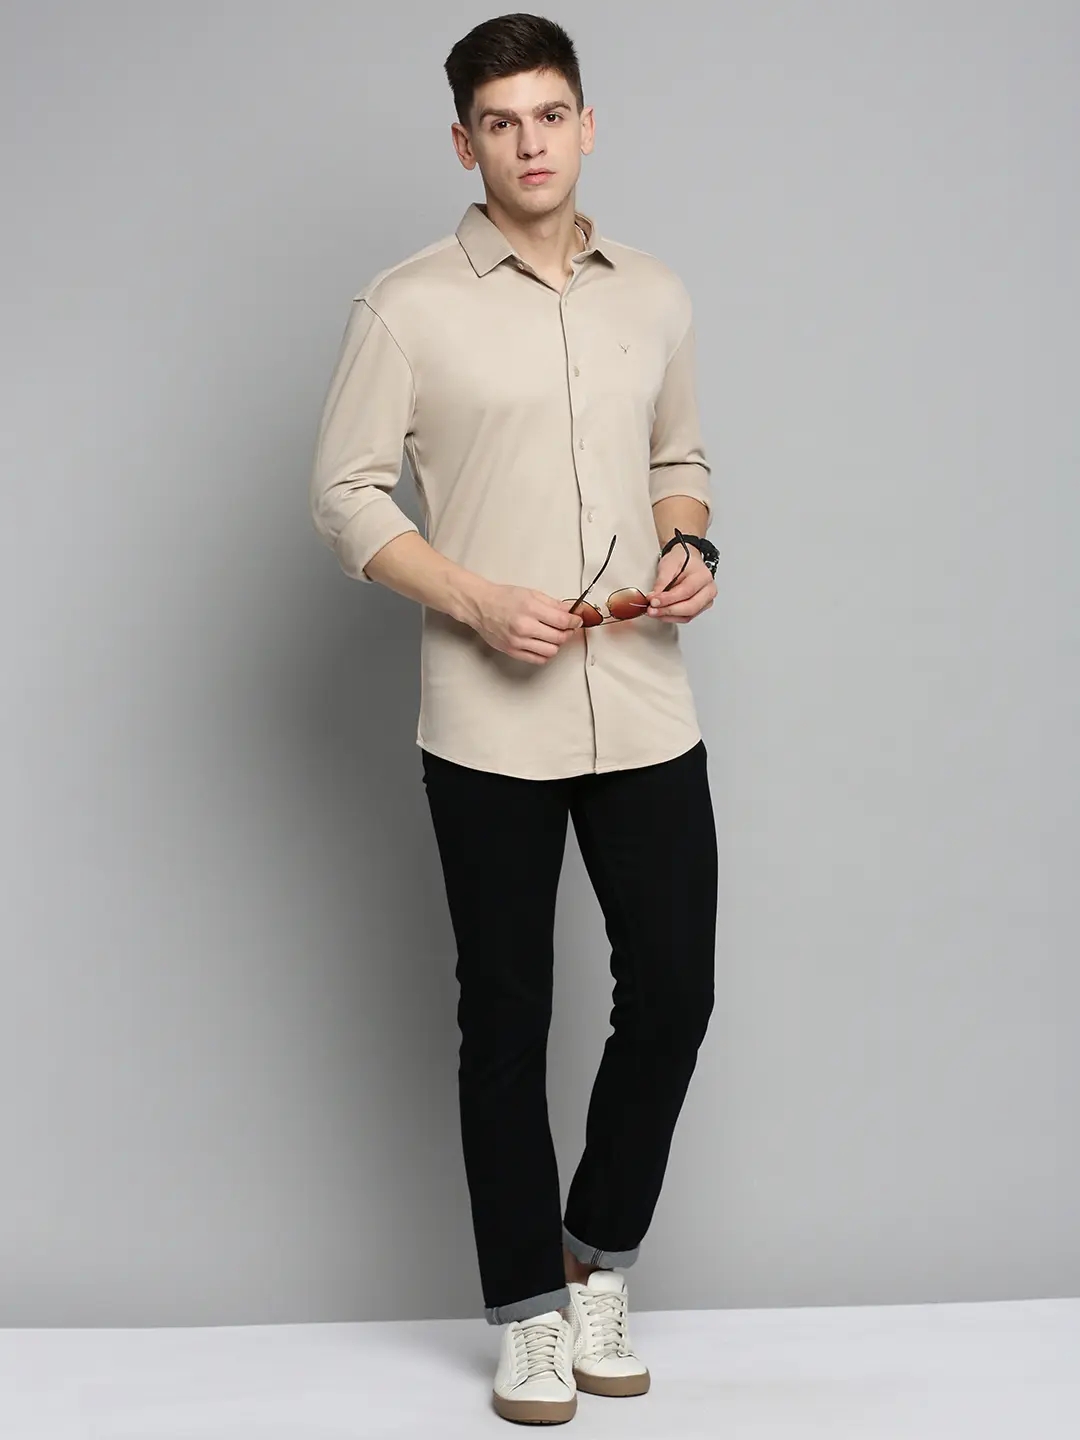 SHOWOFF Men's Spread Collar Tan Solid Shirt